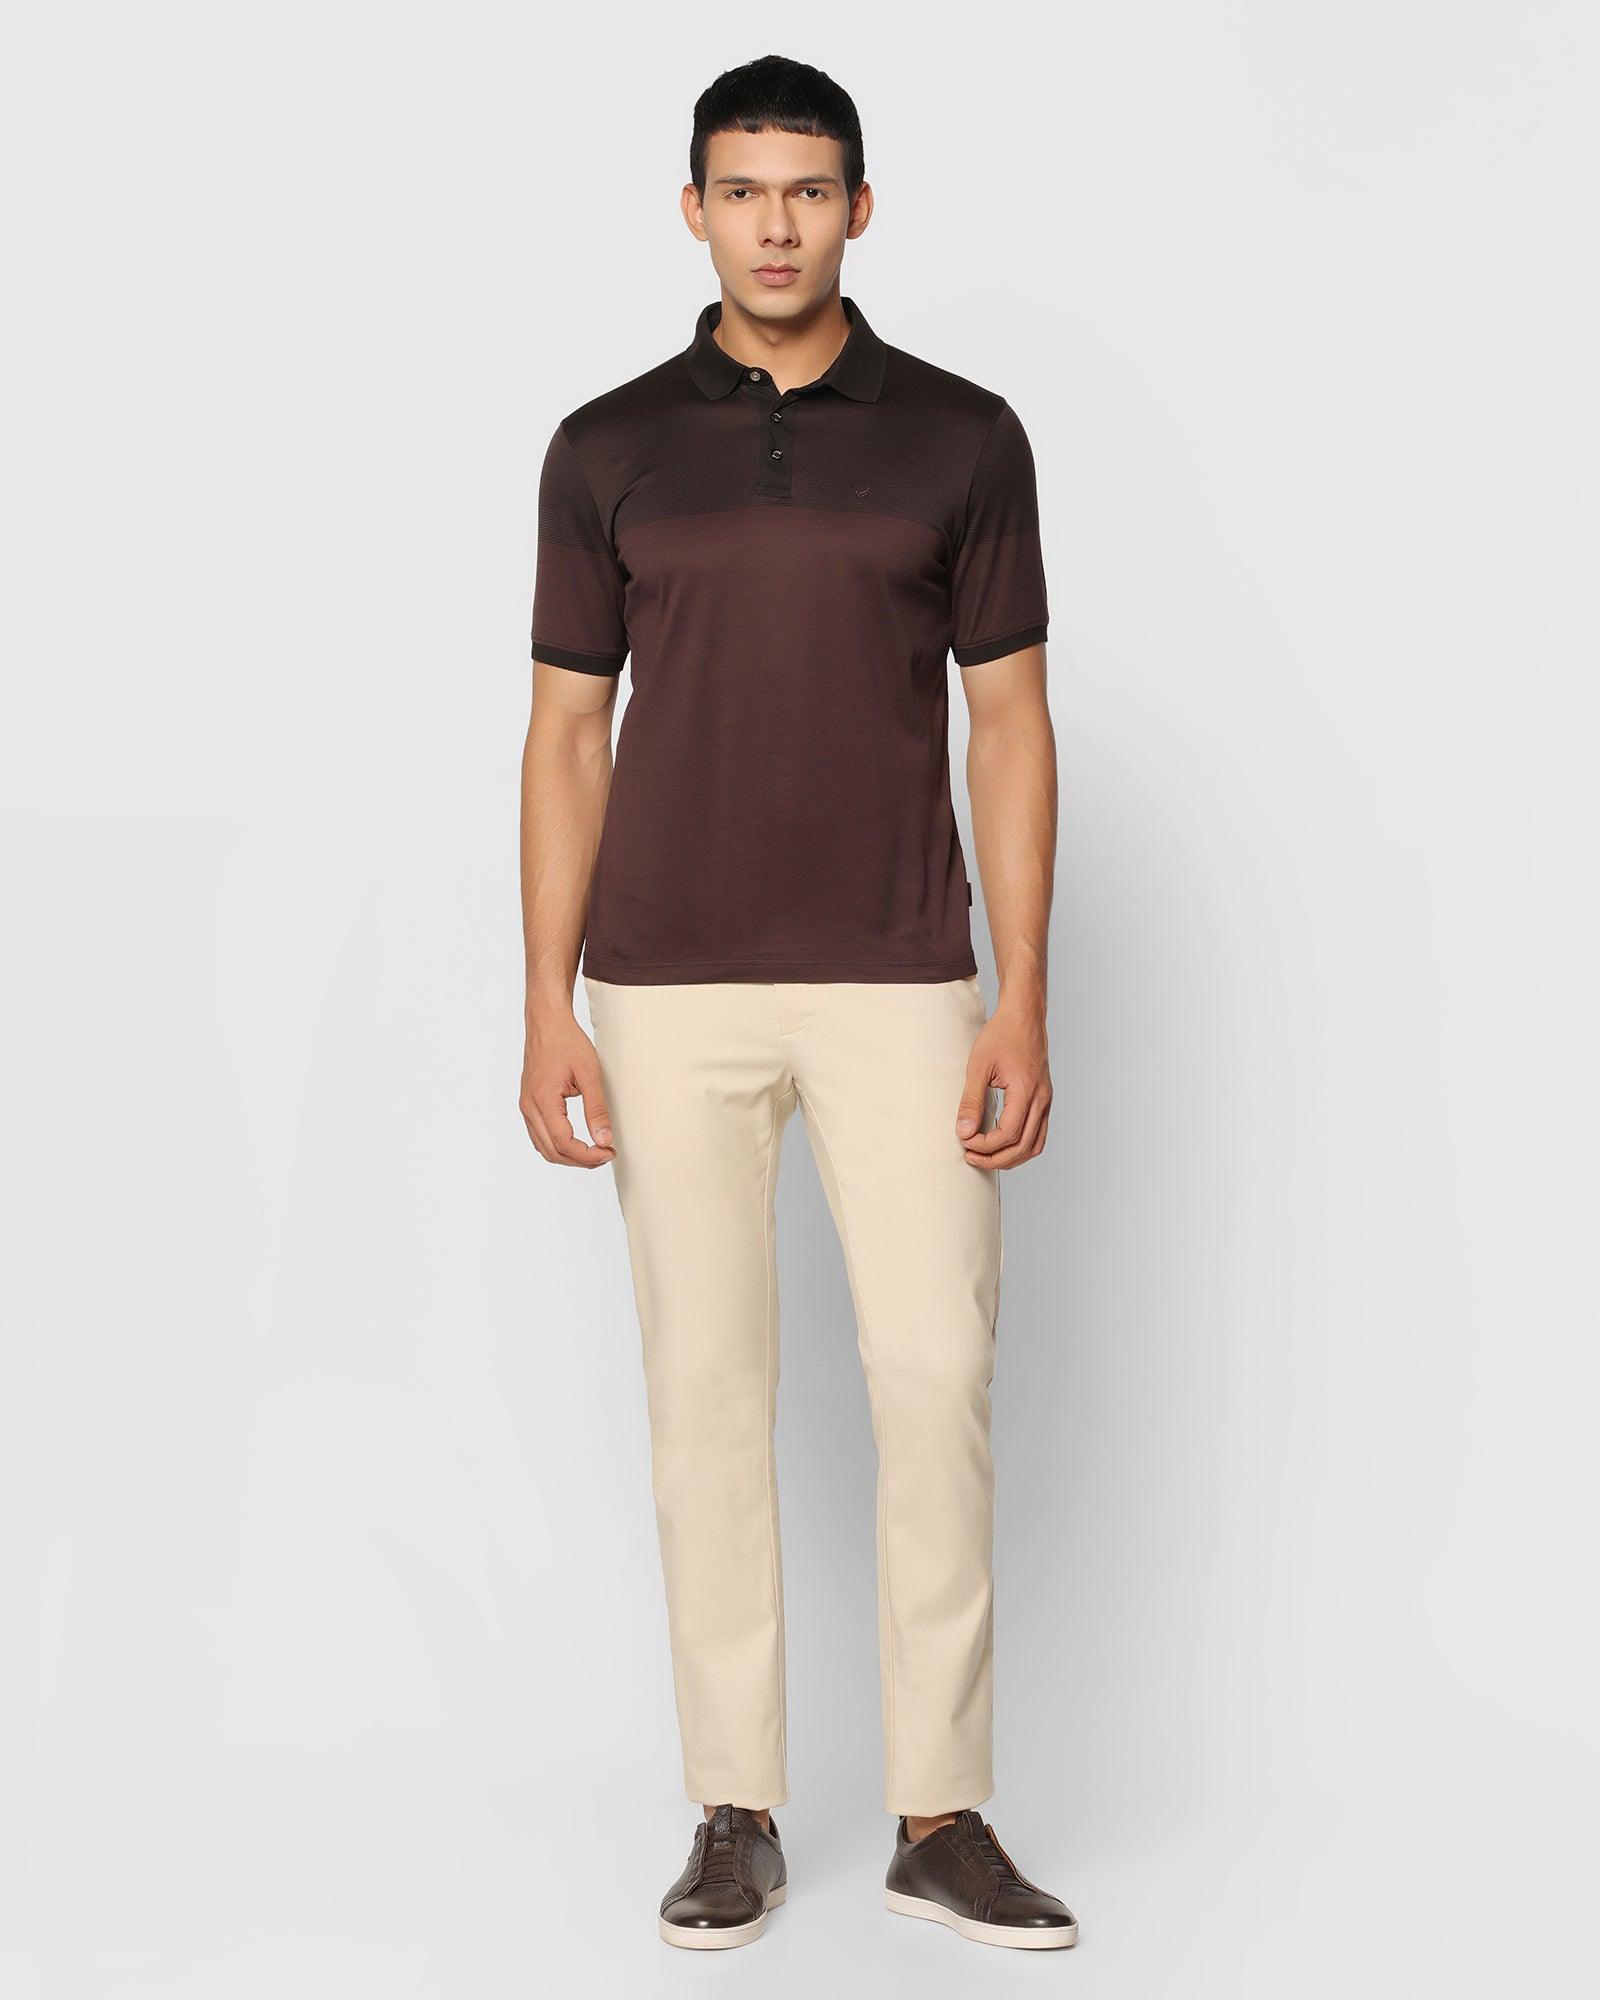 Polo Dark Brown Striped T Shirt - Lake